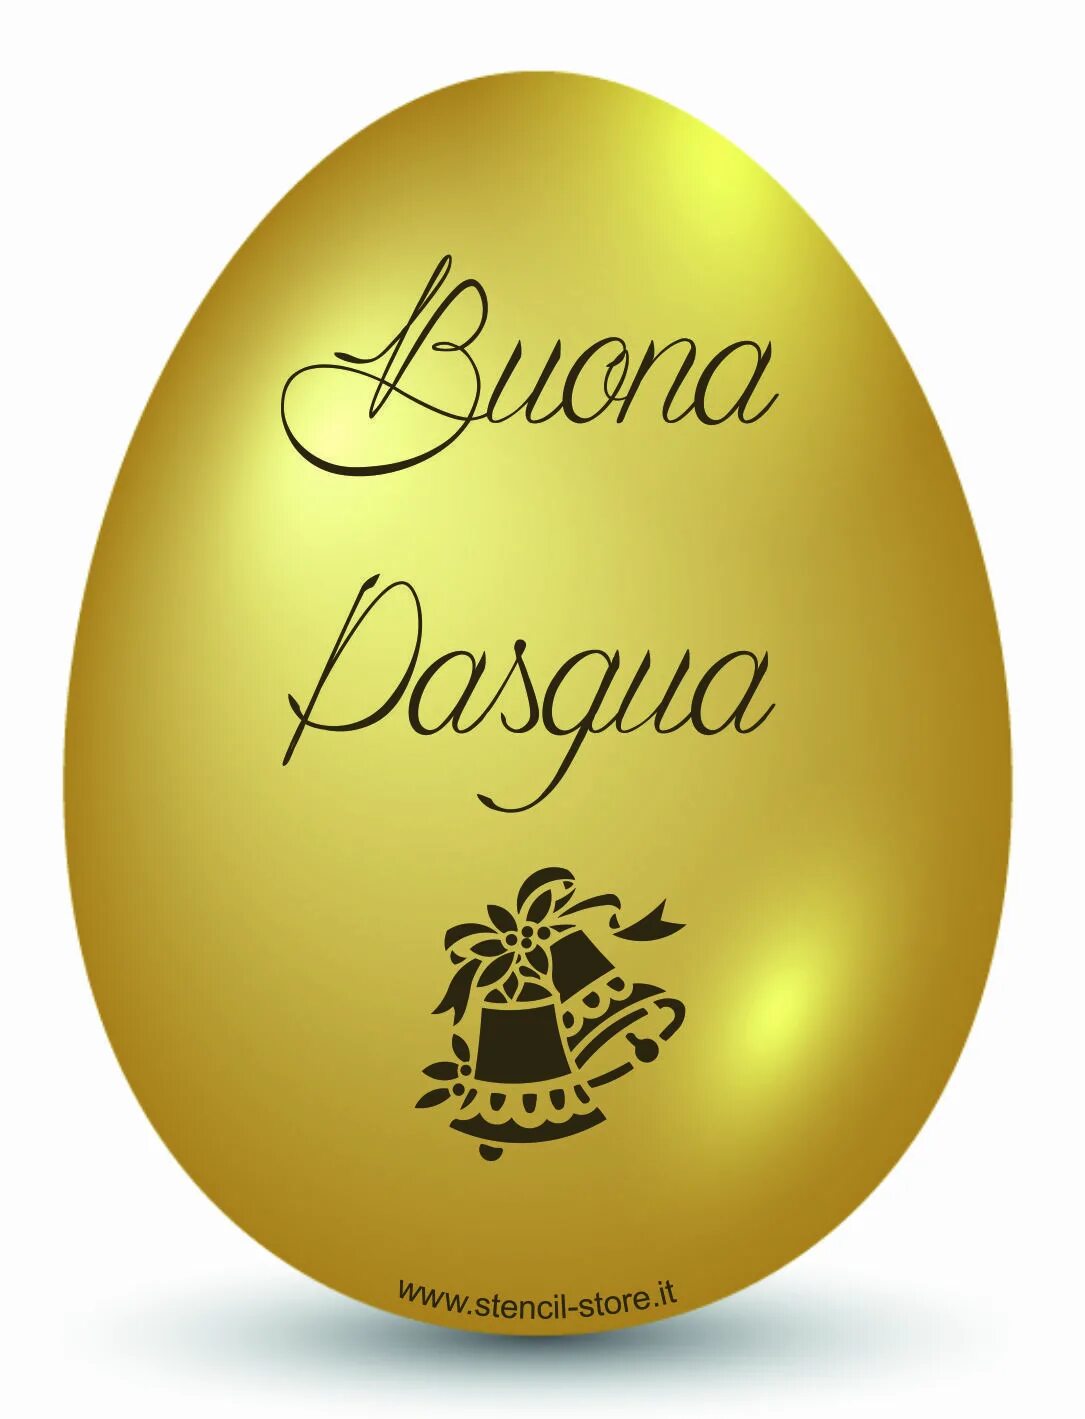 Buona Pasqua на итальянском. Prosecco Pasqua желтая. Buona Pasqua картинки. Открытки Буона Паскуа на итальянском.